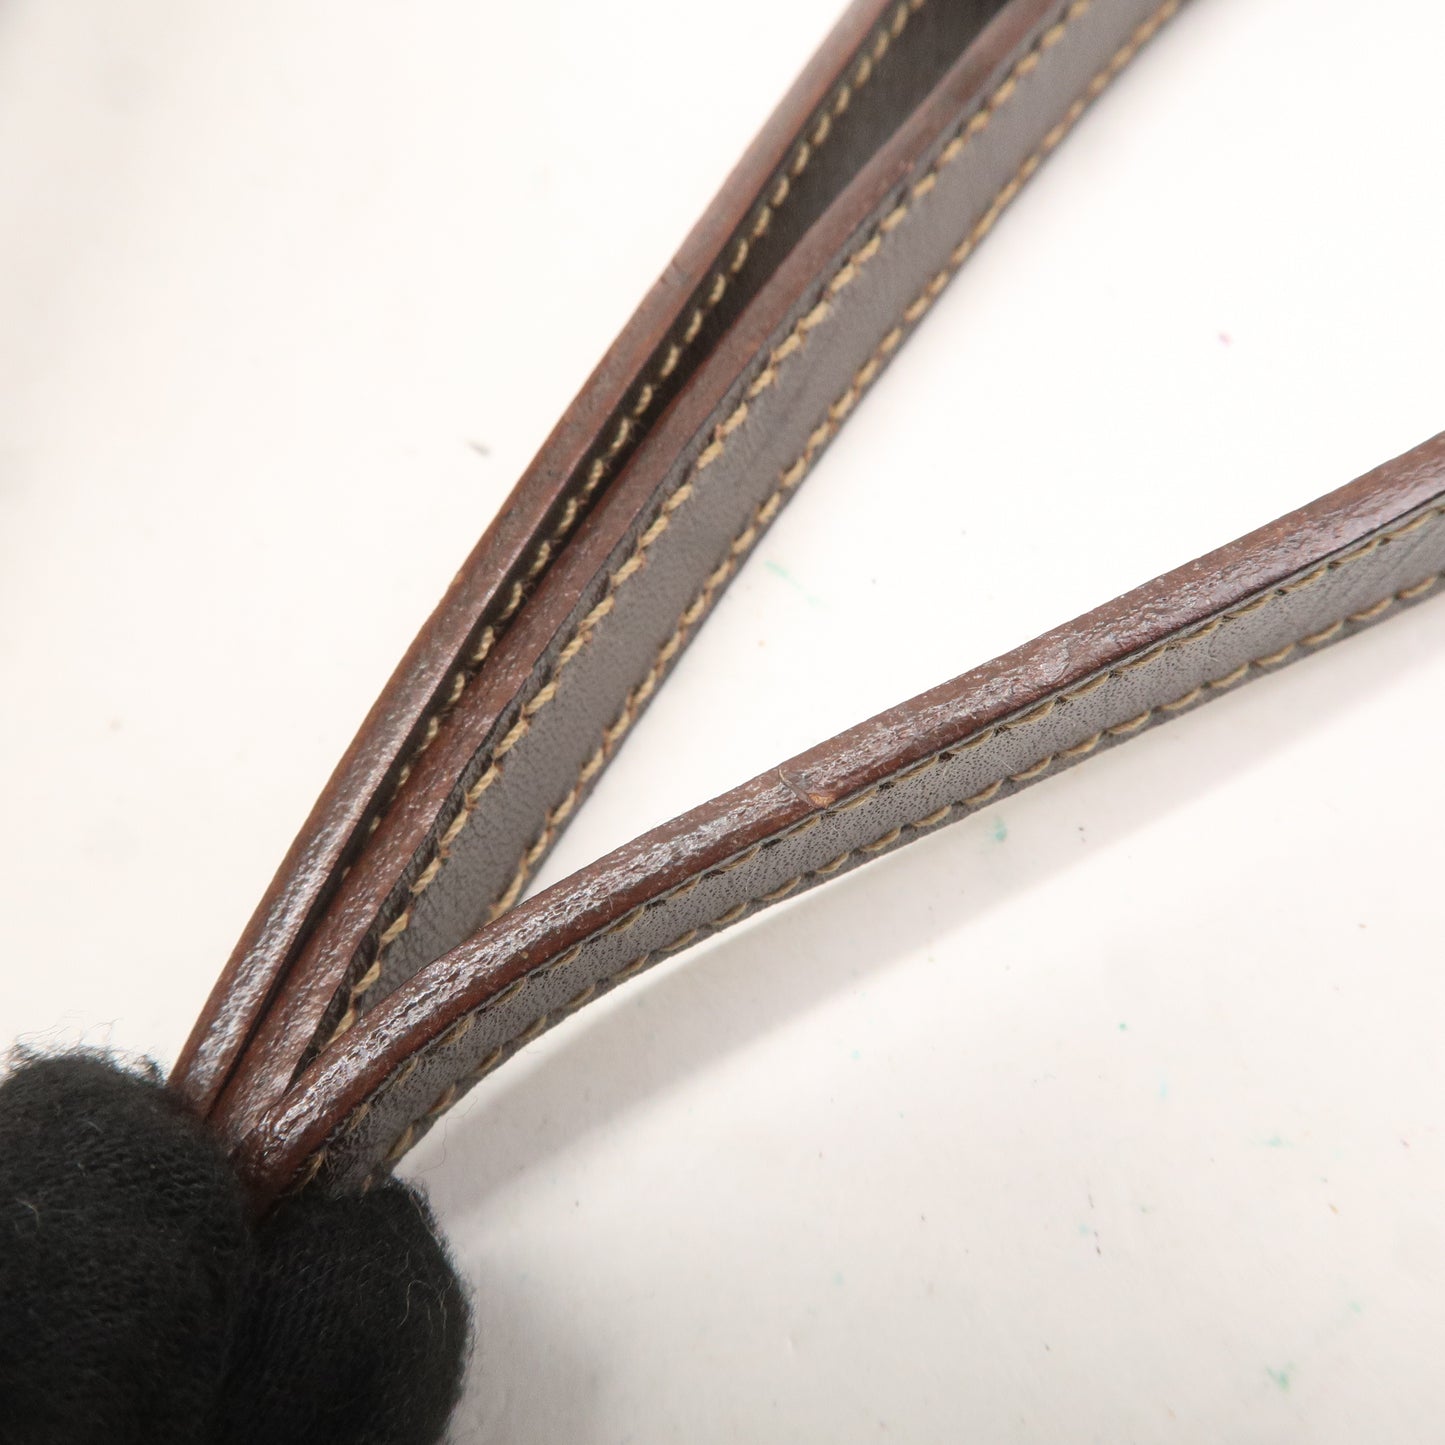 FENDI Zucca Canvas Leather 2WAY Handbag Shoulder Bag